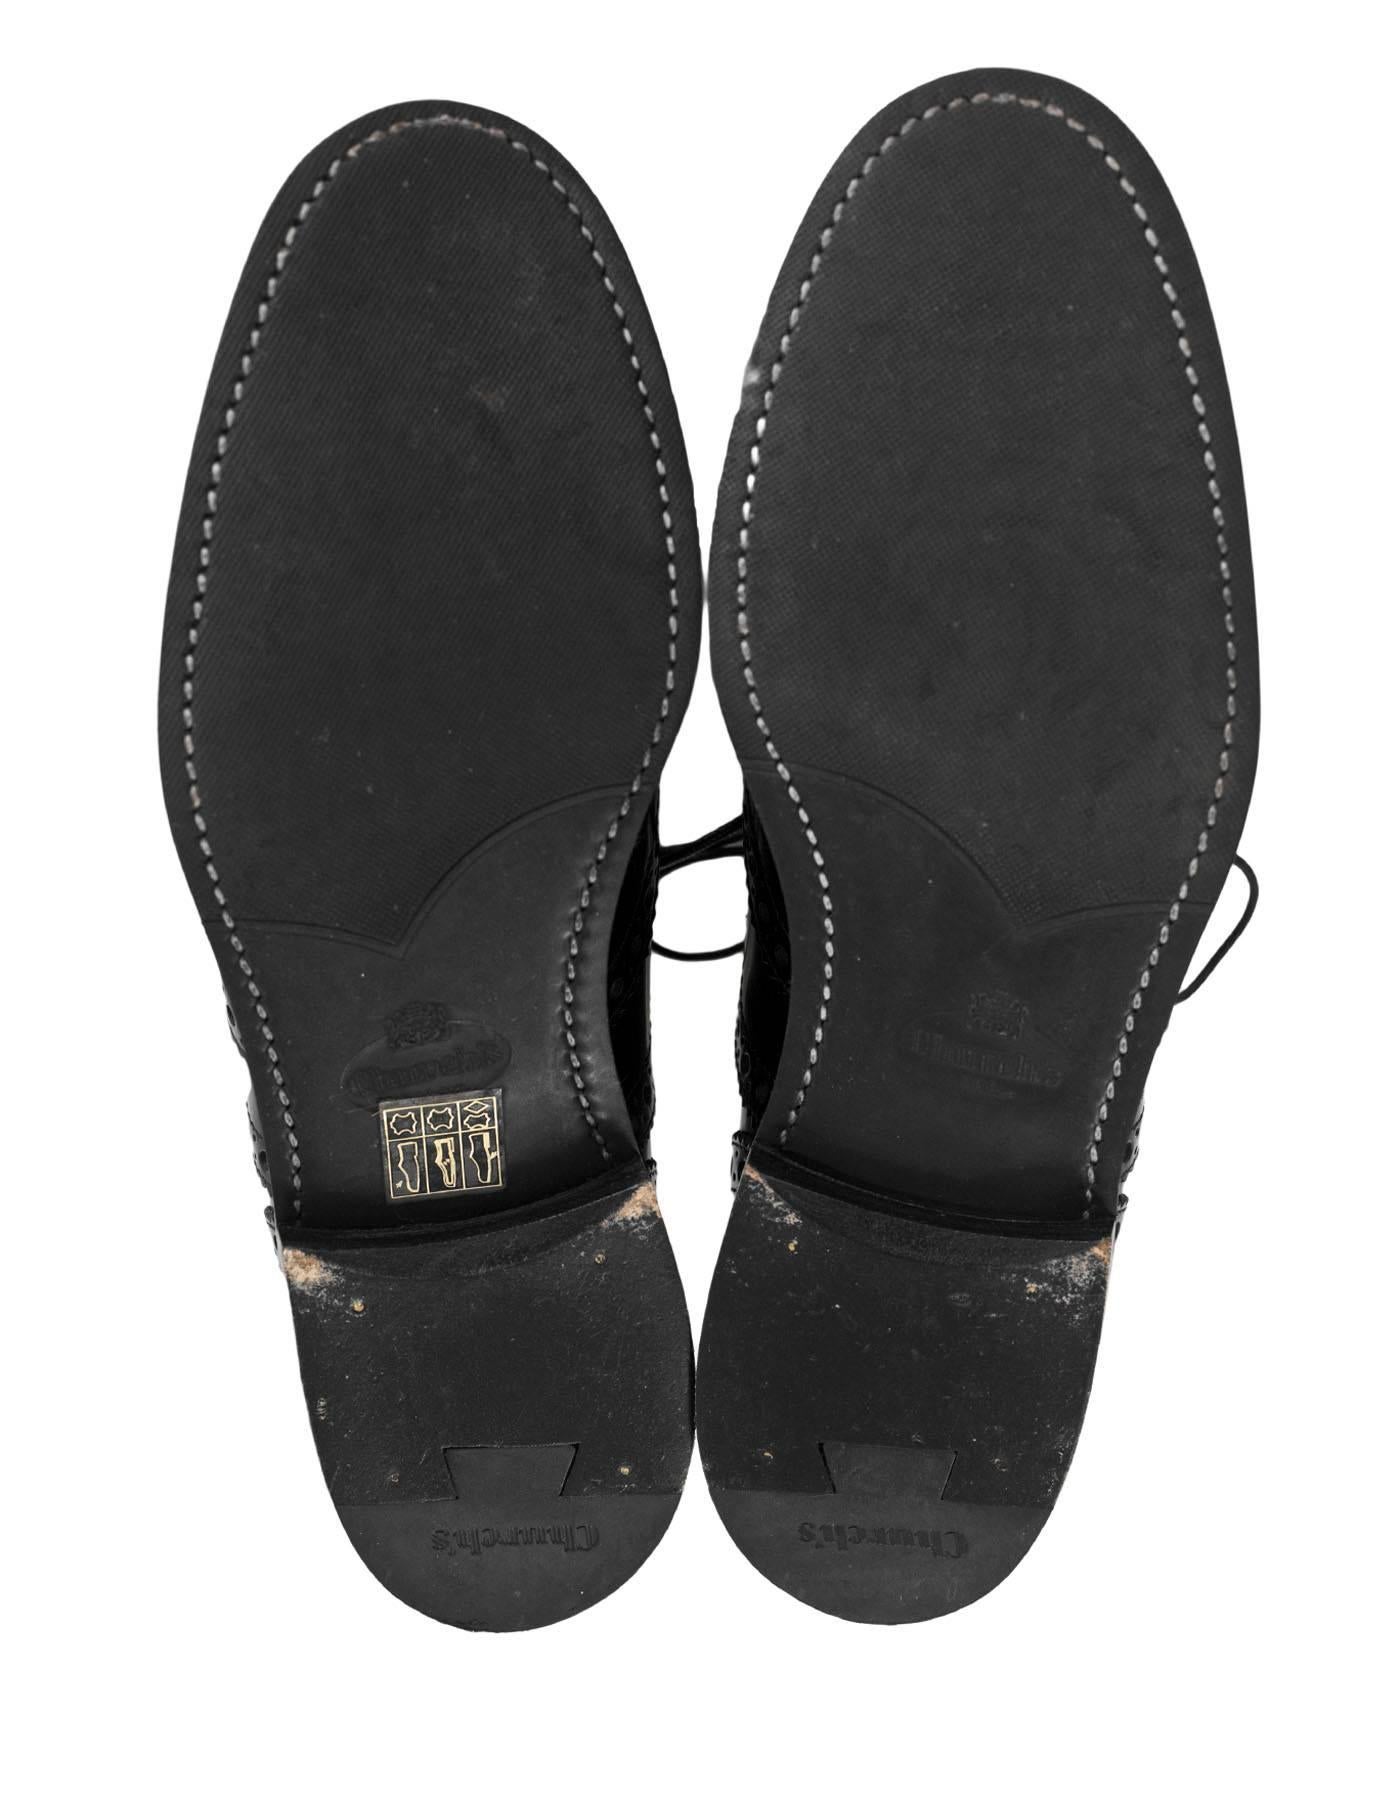 Church's Black Spectator Oxford Shoes sz 7 1